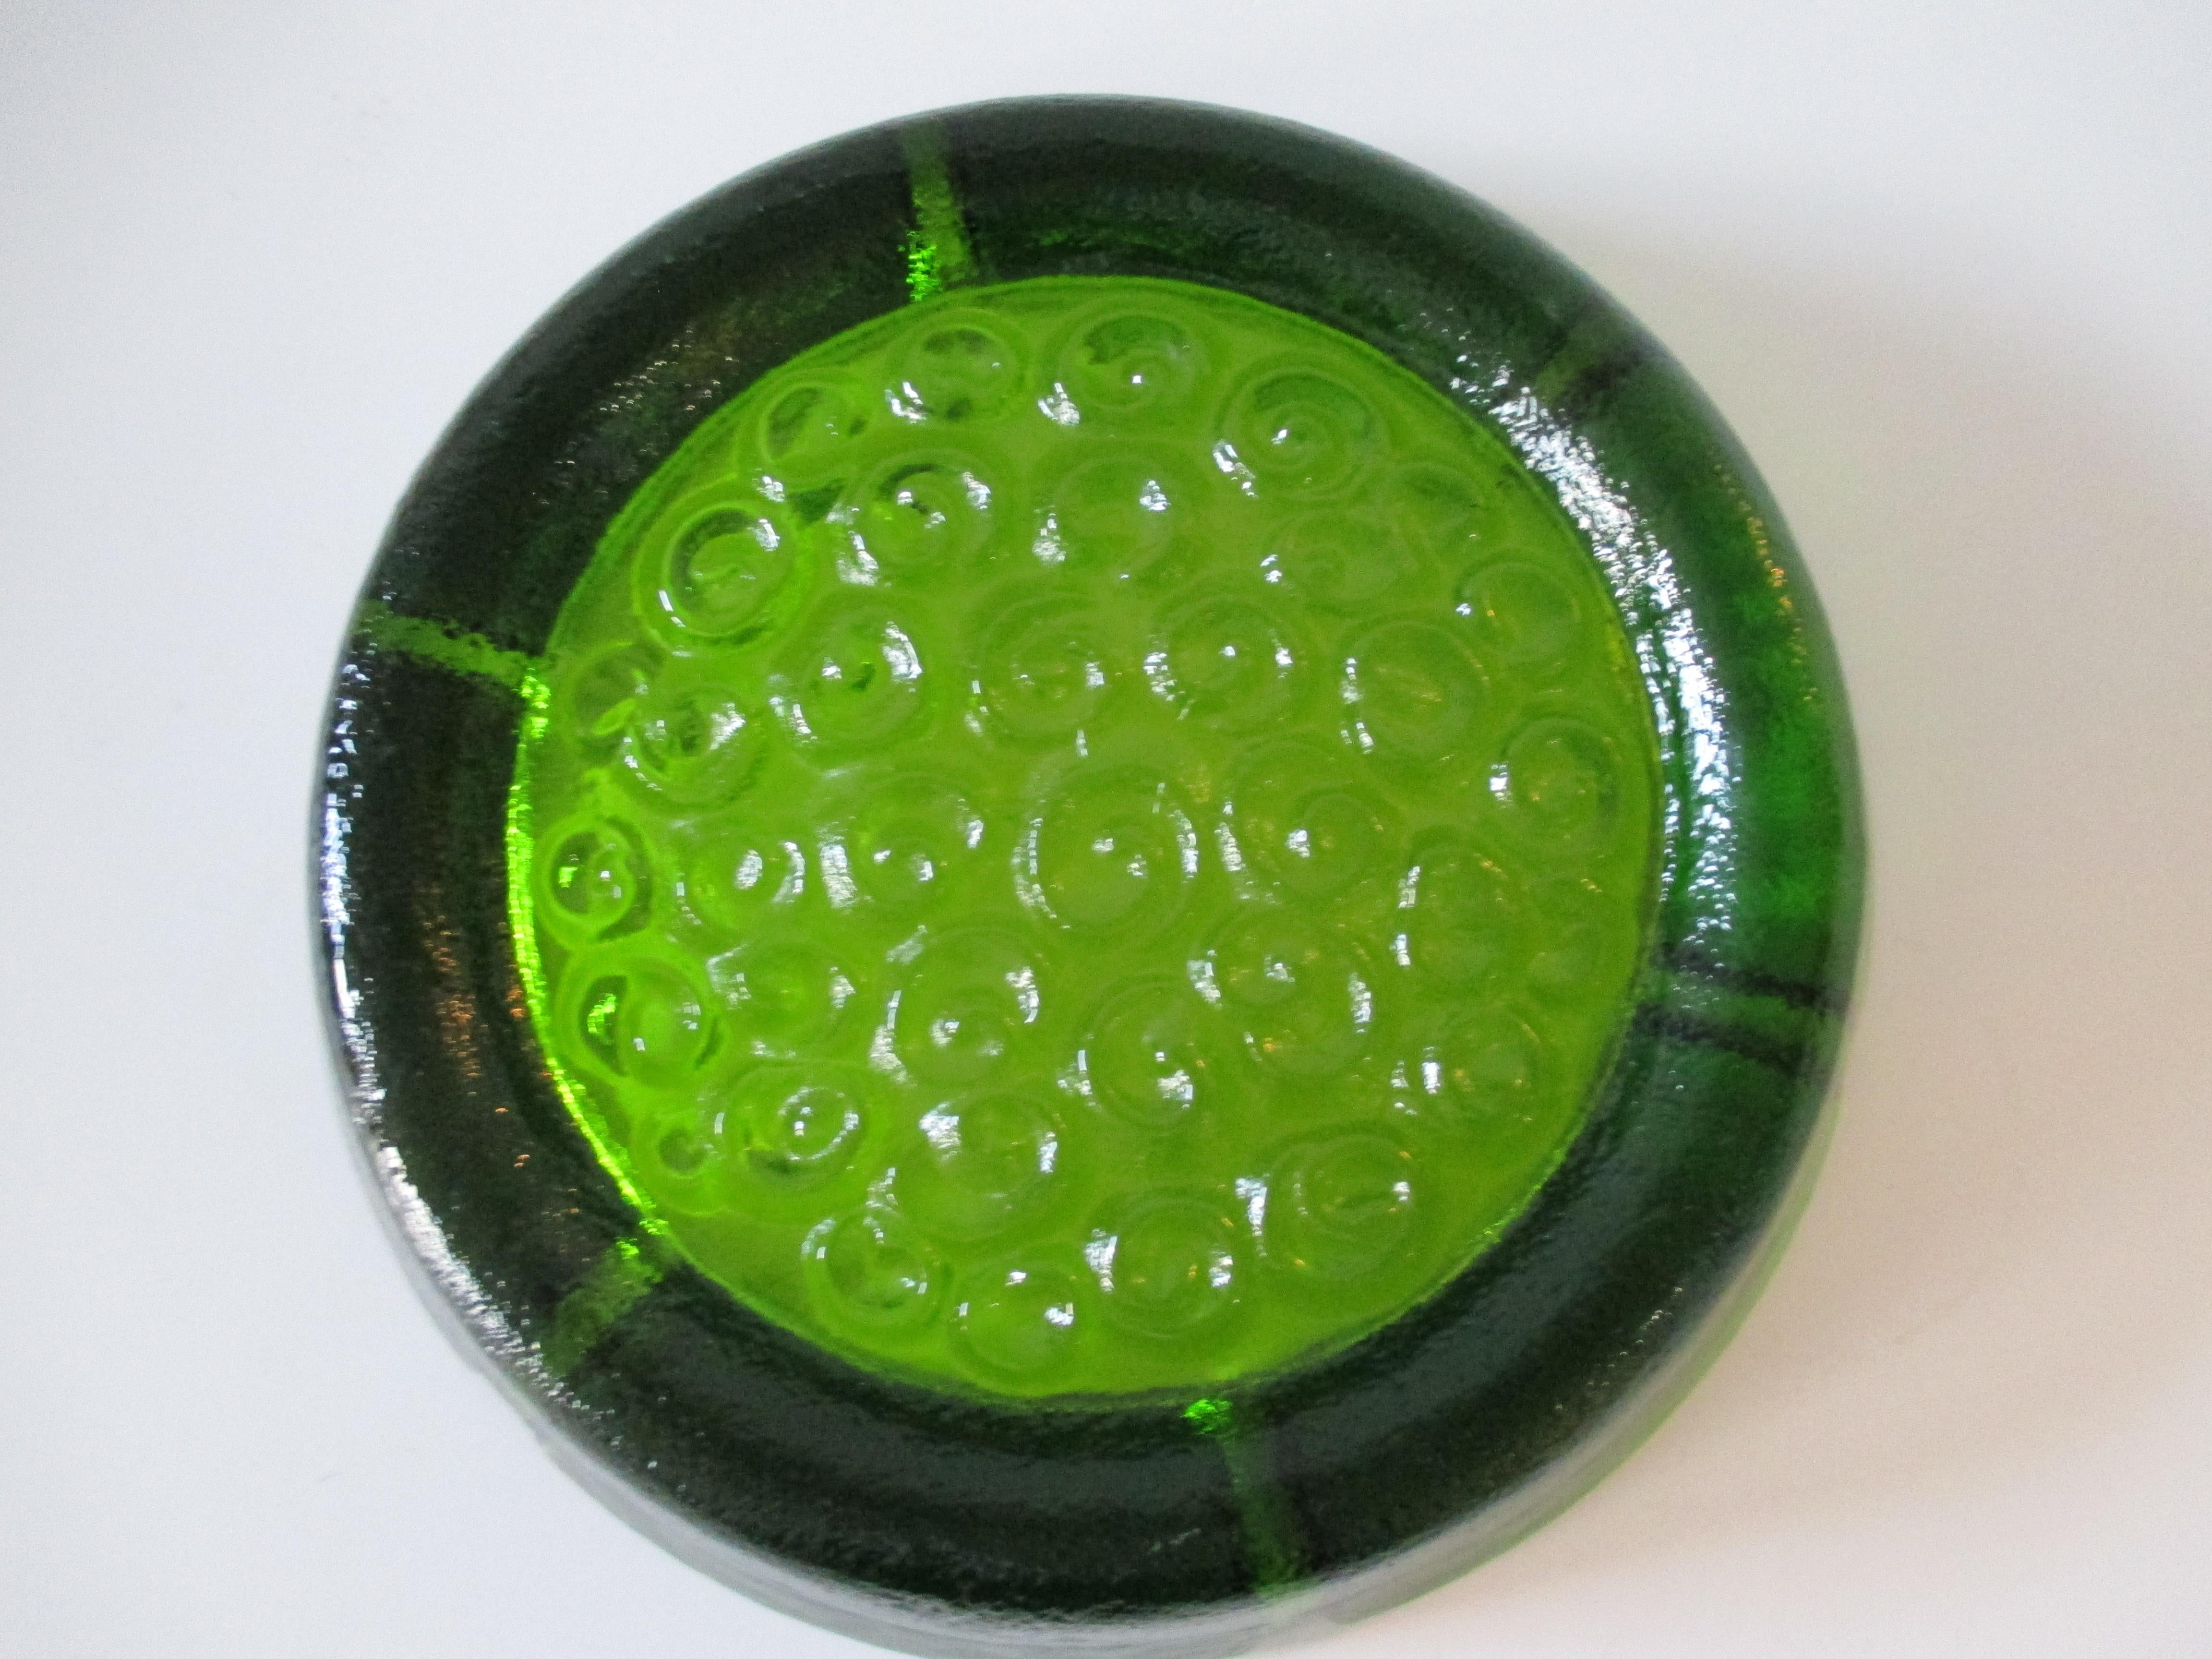 Large Scale Mid-Century Modern emerald green Blenko glass ashtray.
Size: 9.5